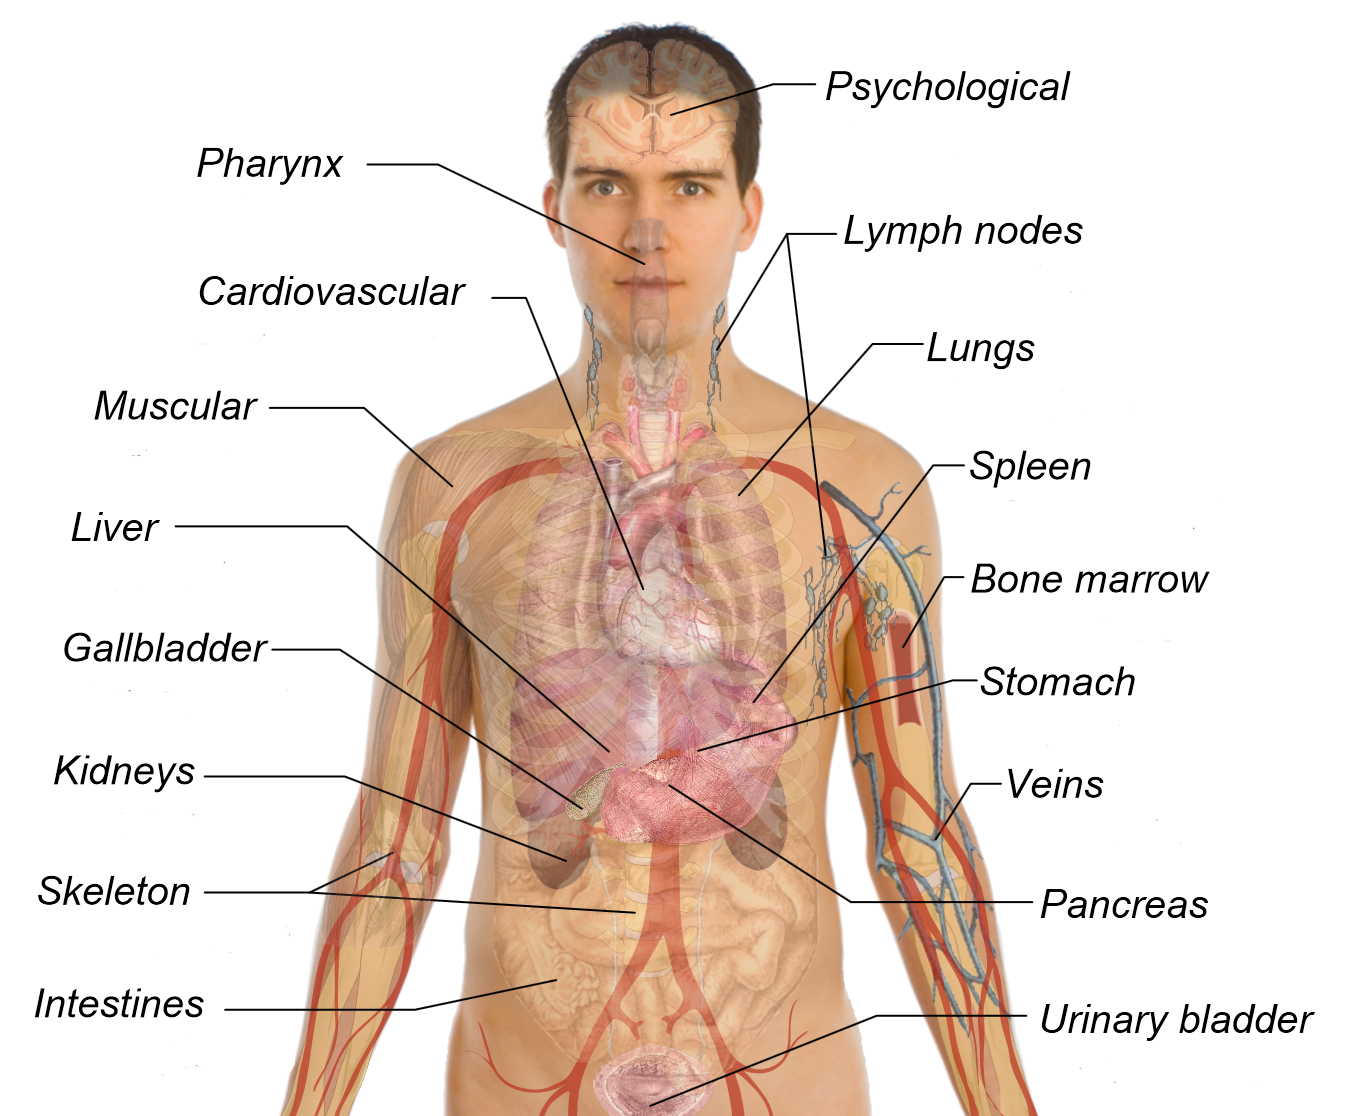 Blank Human Body Diagram/Template